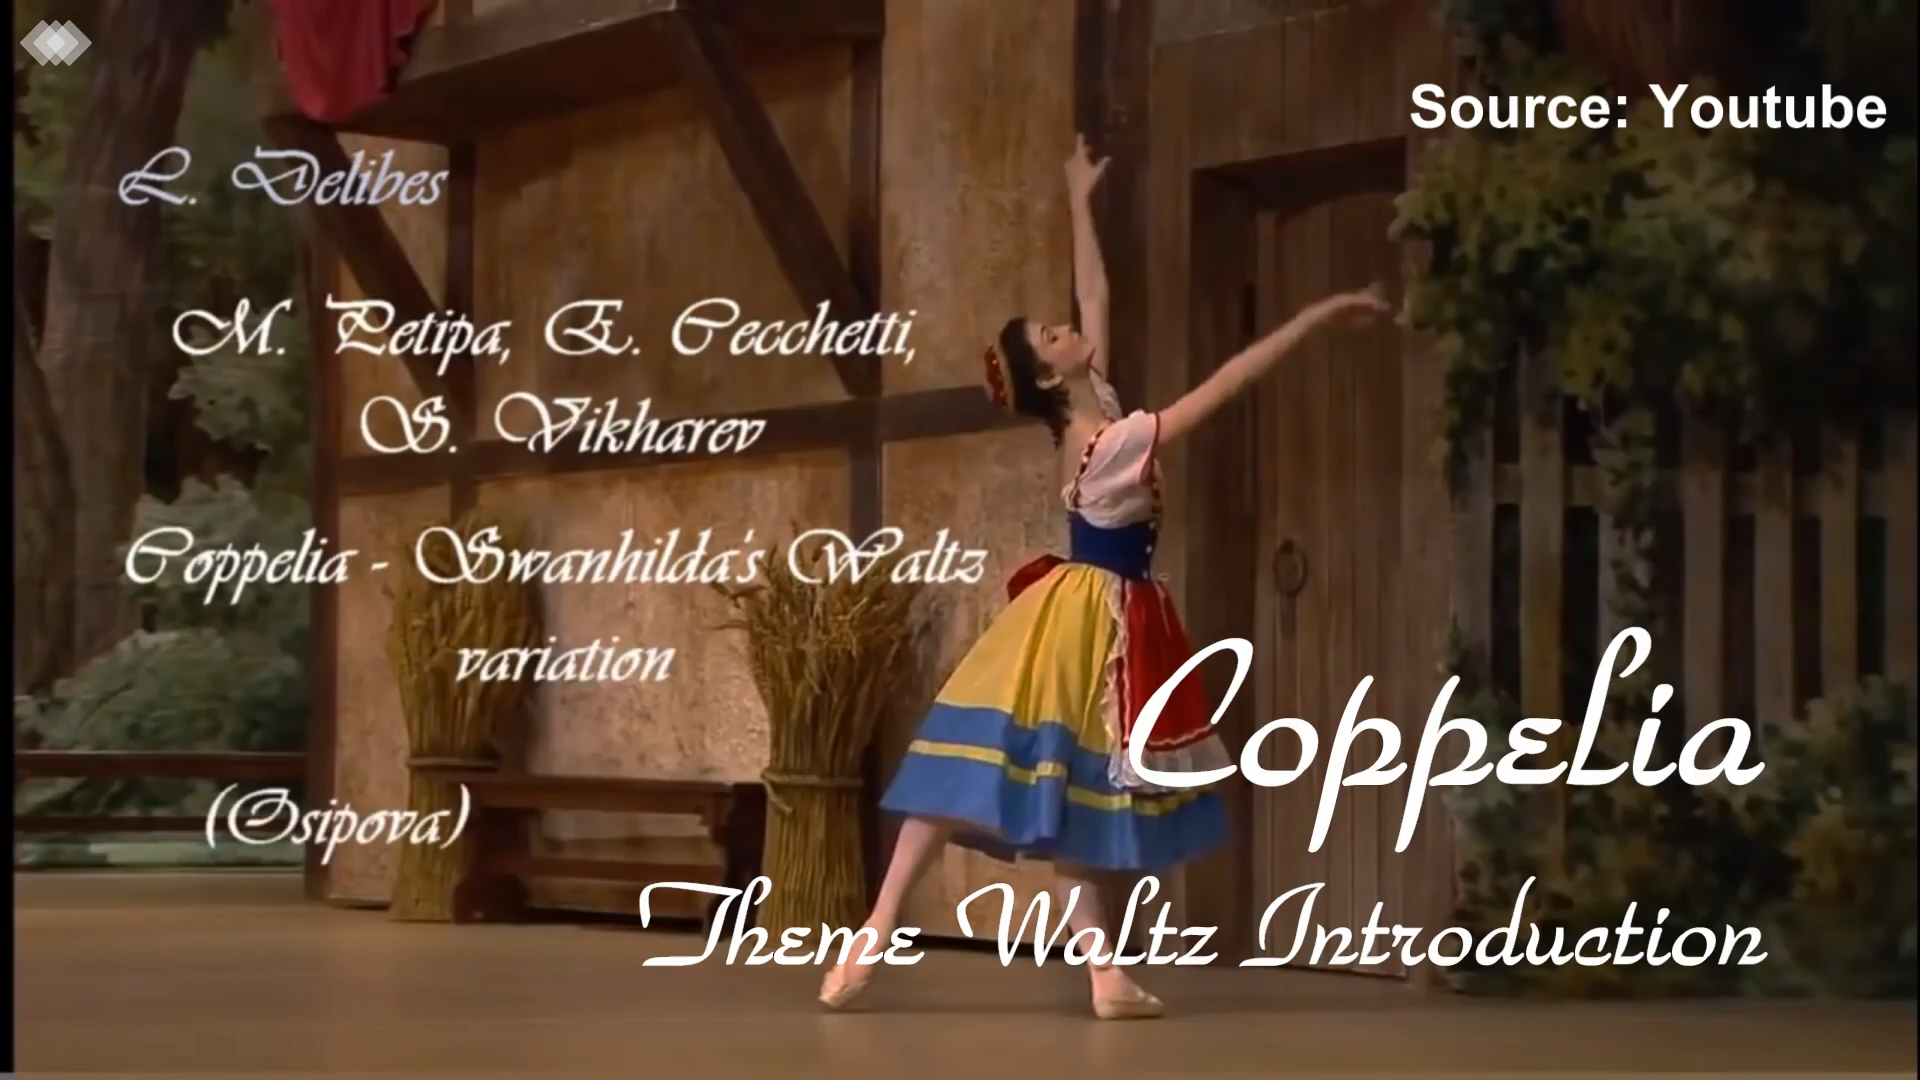 Coppelia<br />
Theme <br />
Waltz Introduction